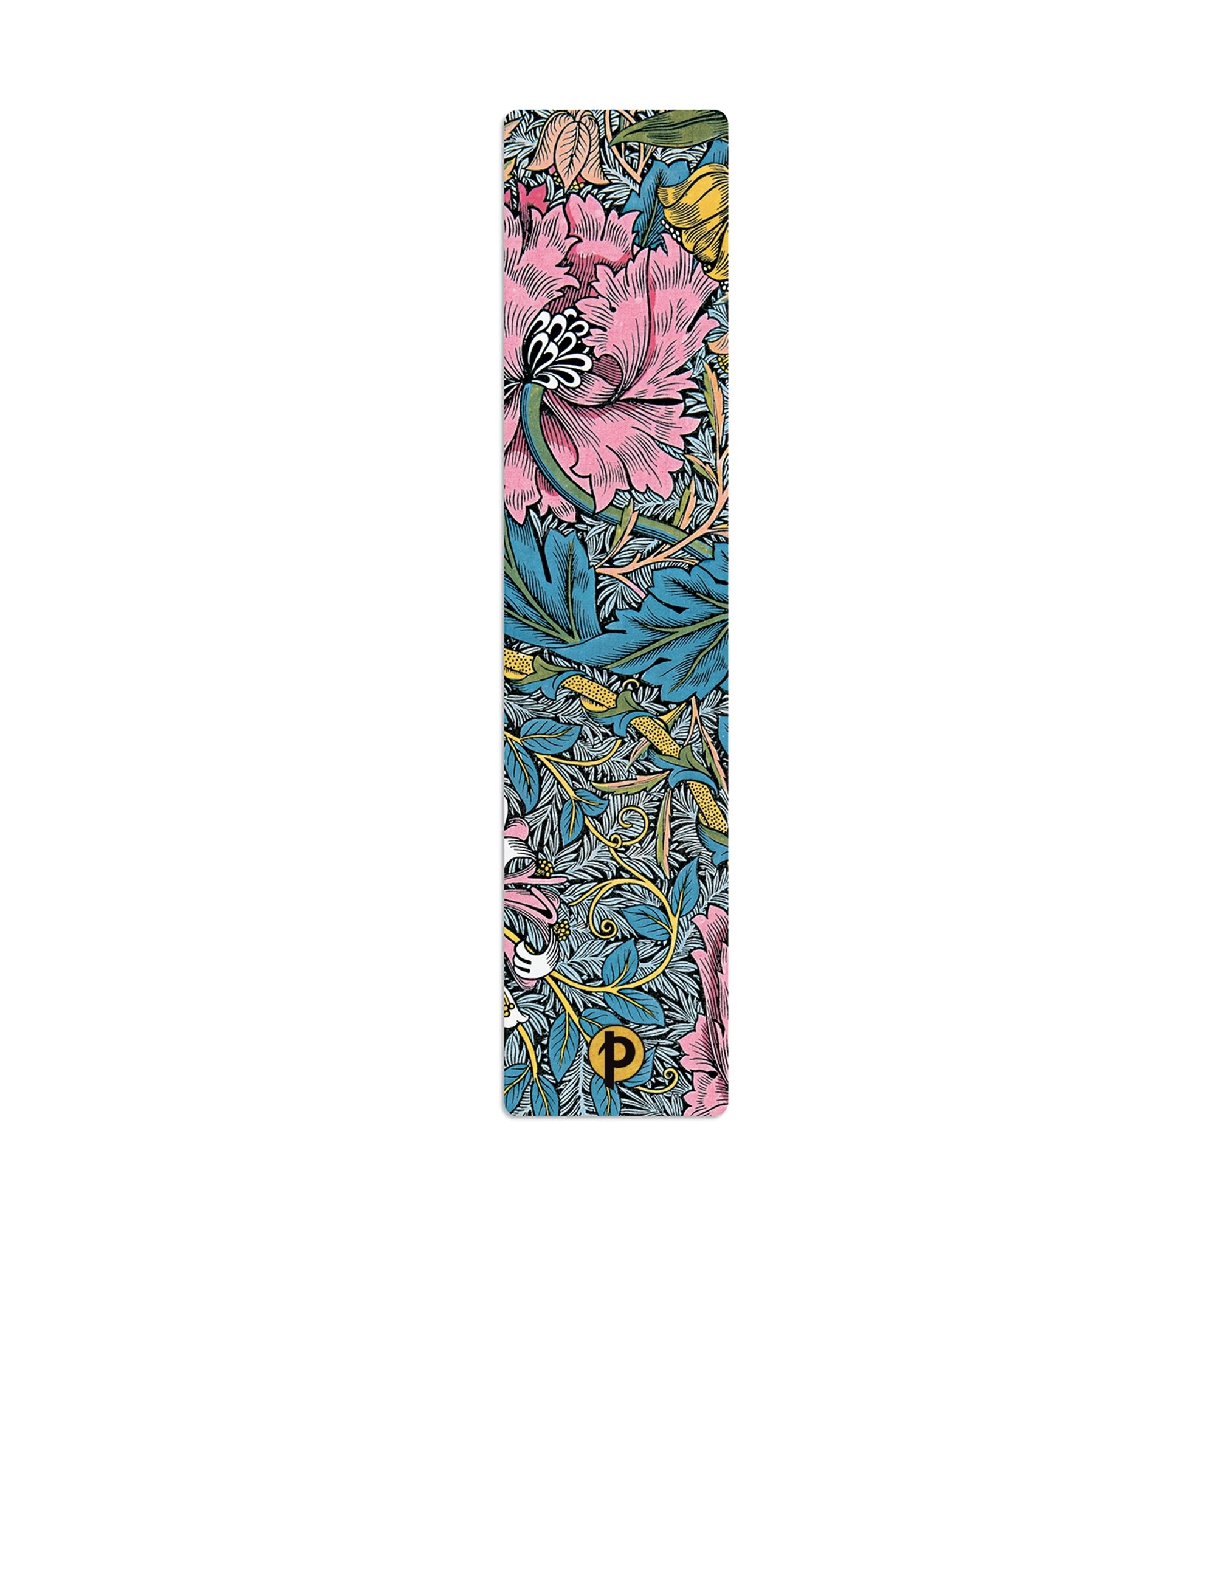 Morris Pink Honeysuckle, William Morris, Bookmark